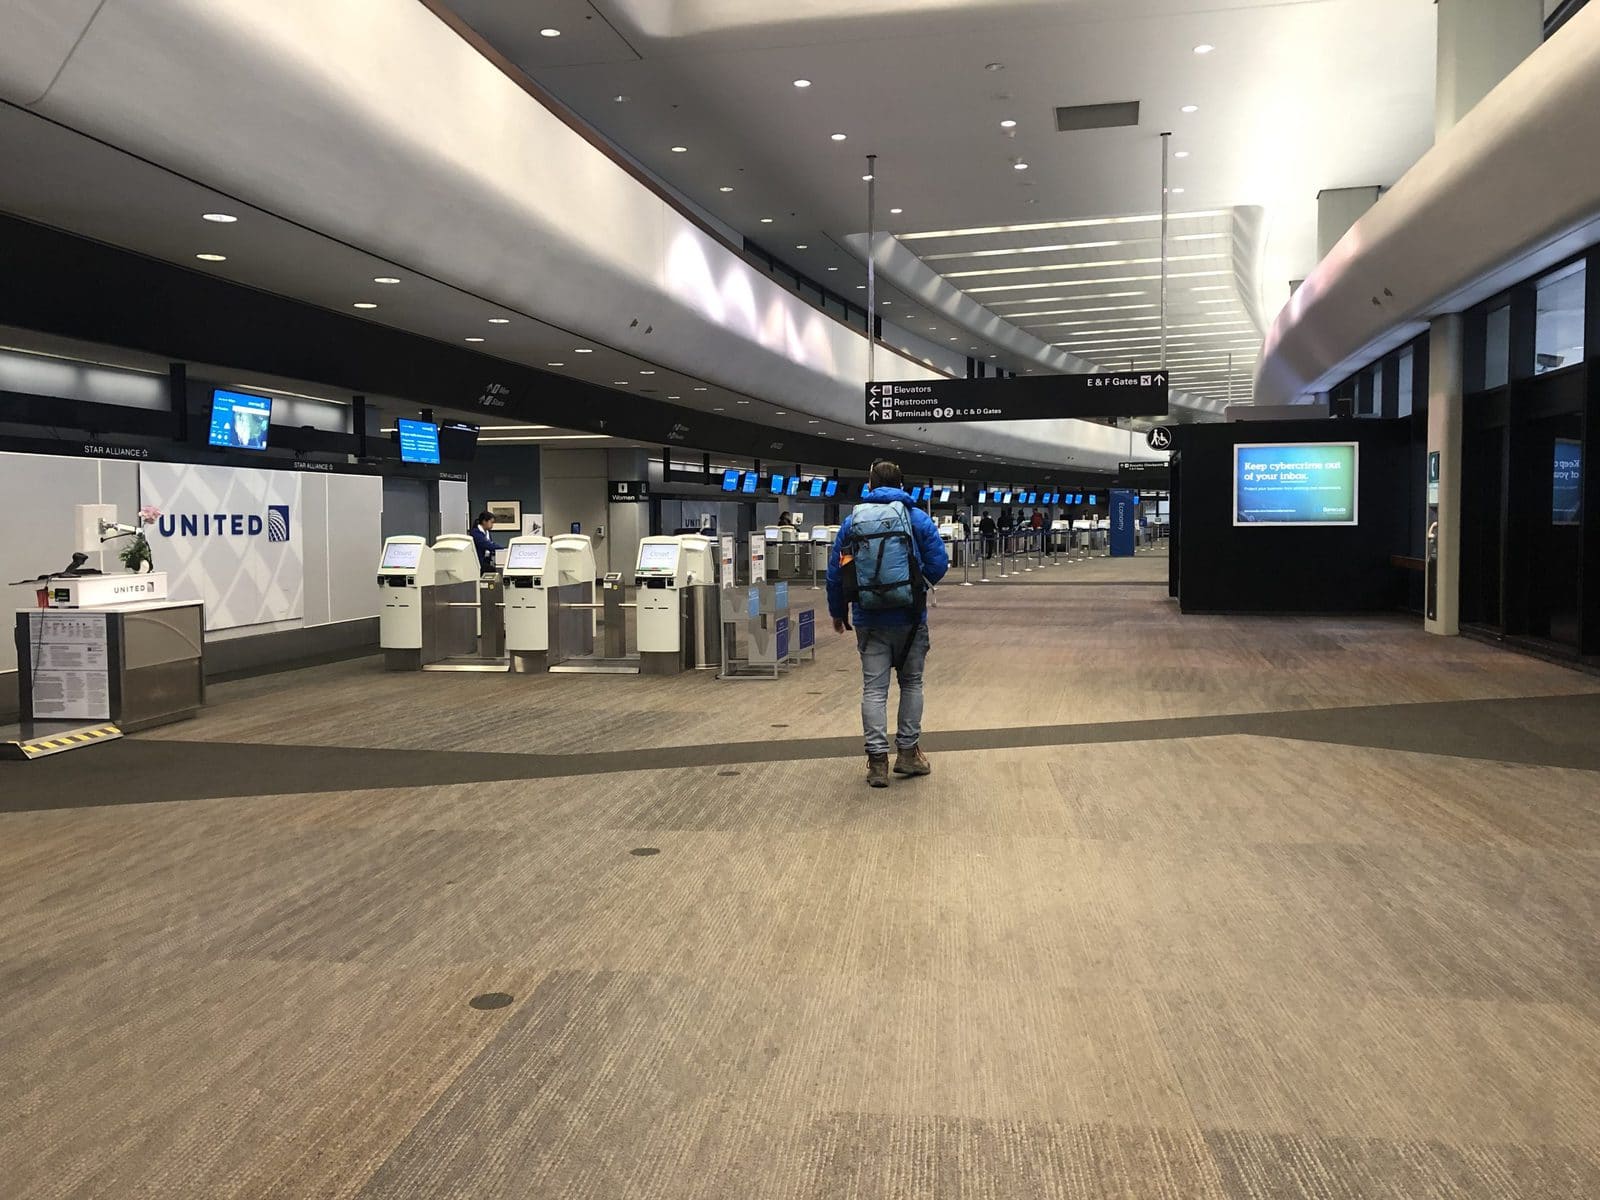 San Francisco Airport - empty!